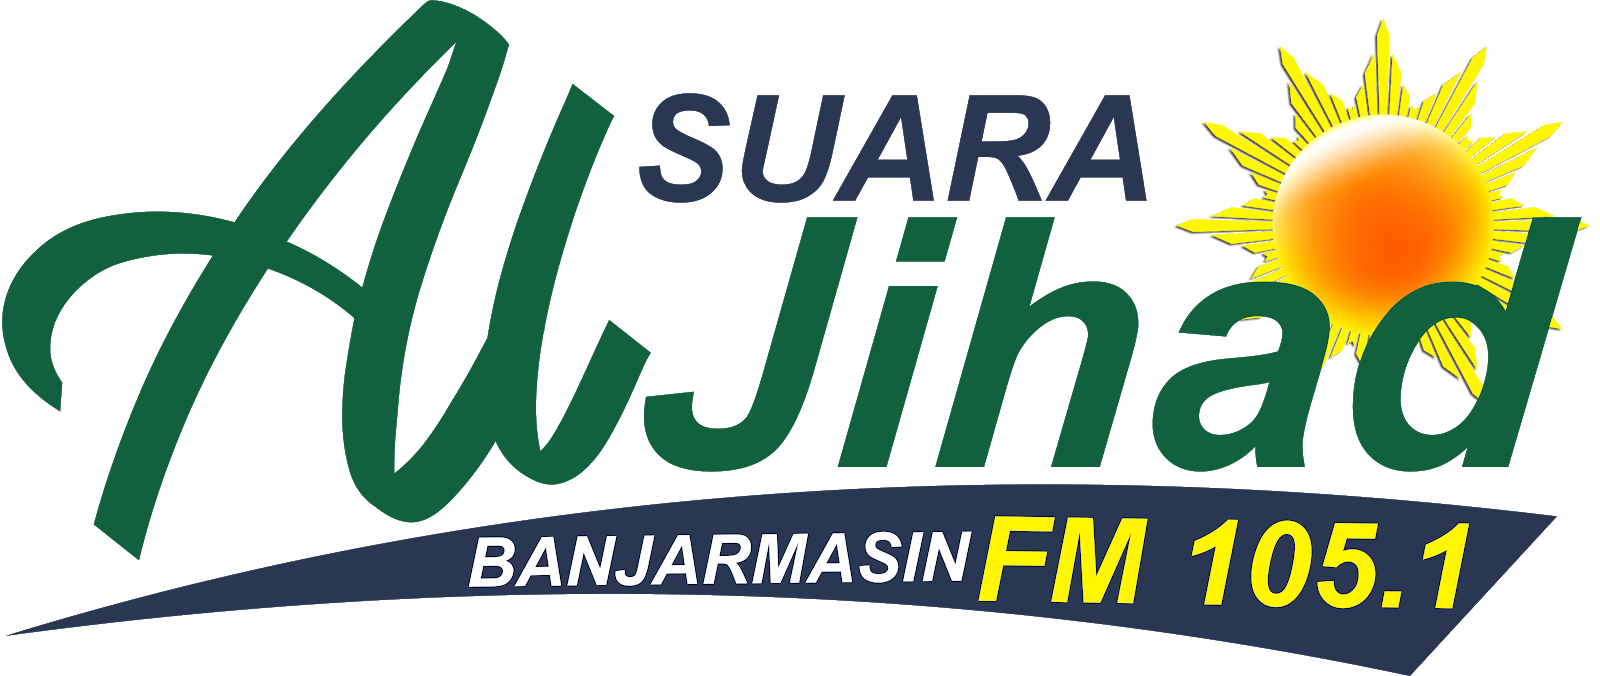 SUARA ALJIHAD FM